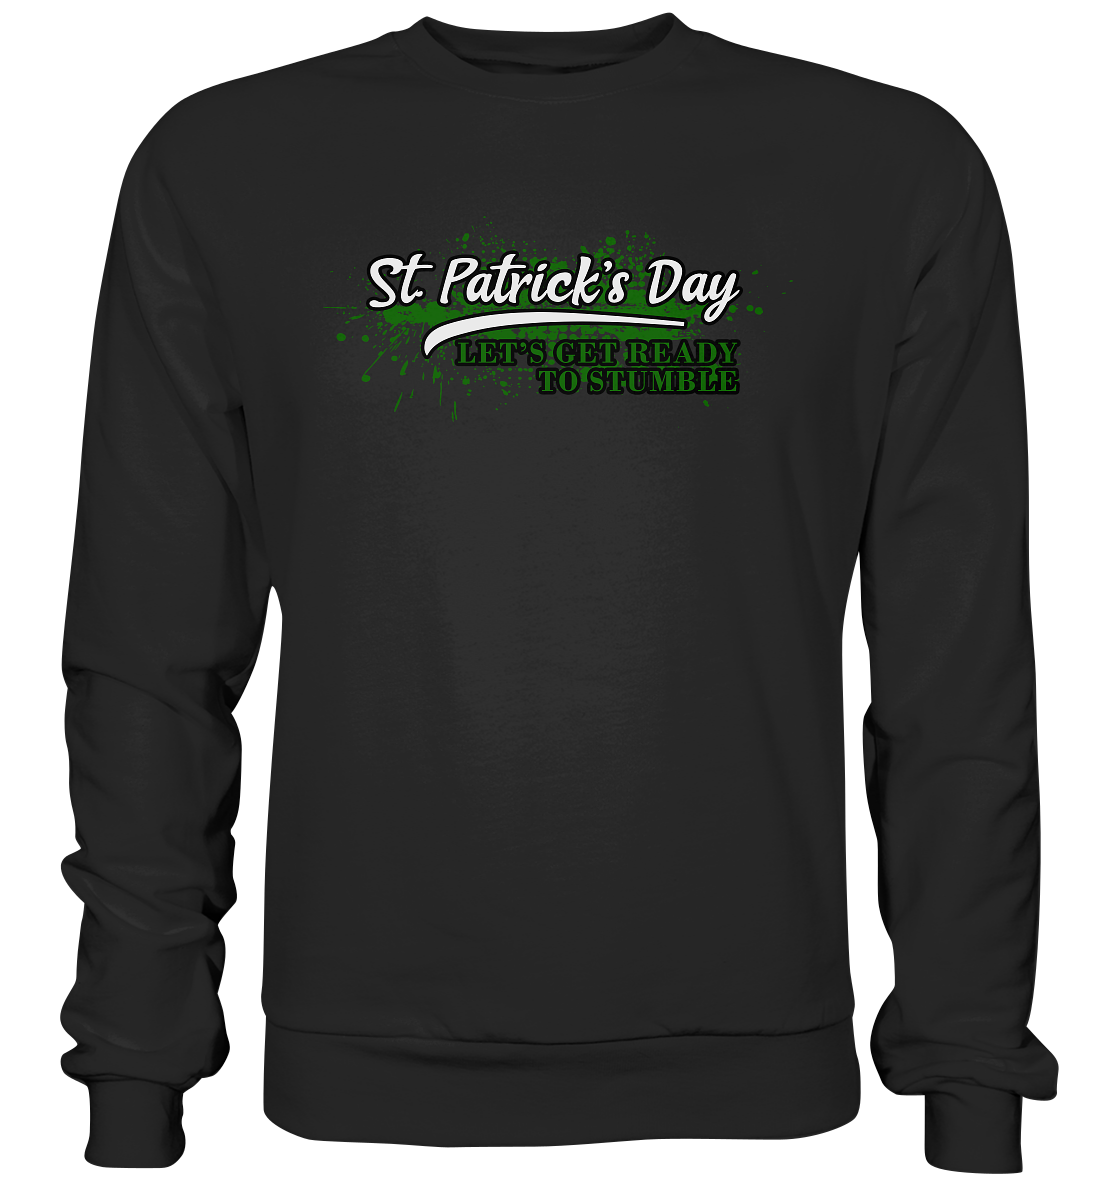 St. Patrick's Day "Let's Get Ready To Stumble" - Premium Sweatshirt